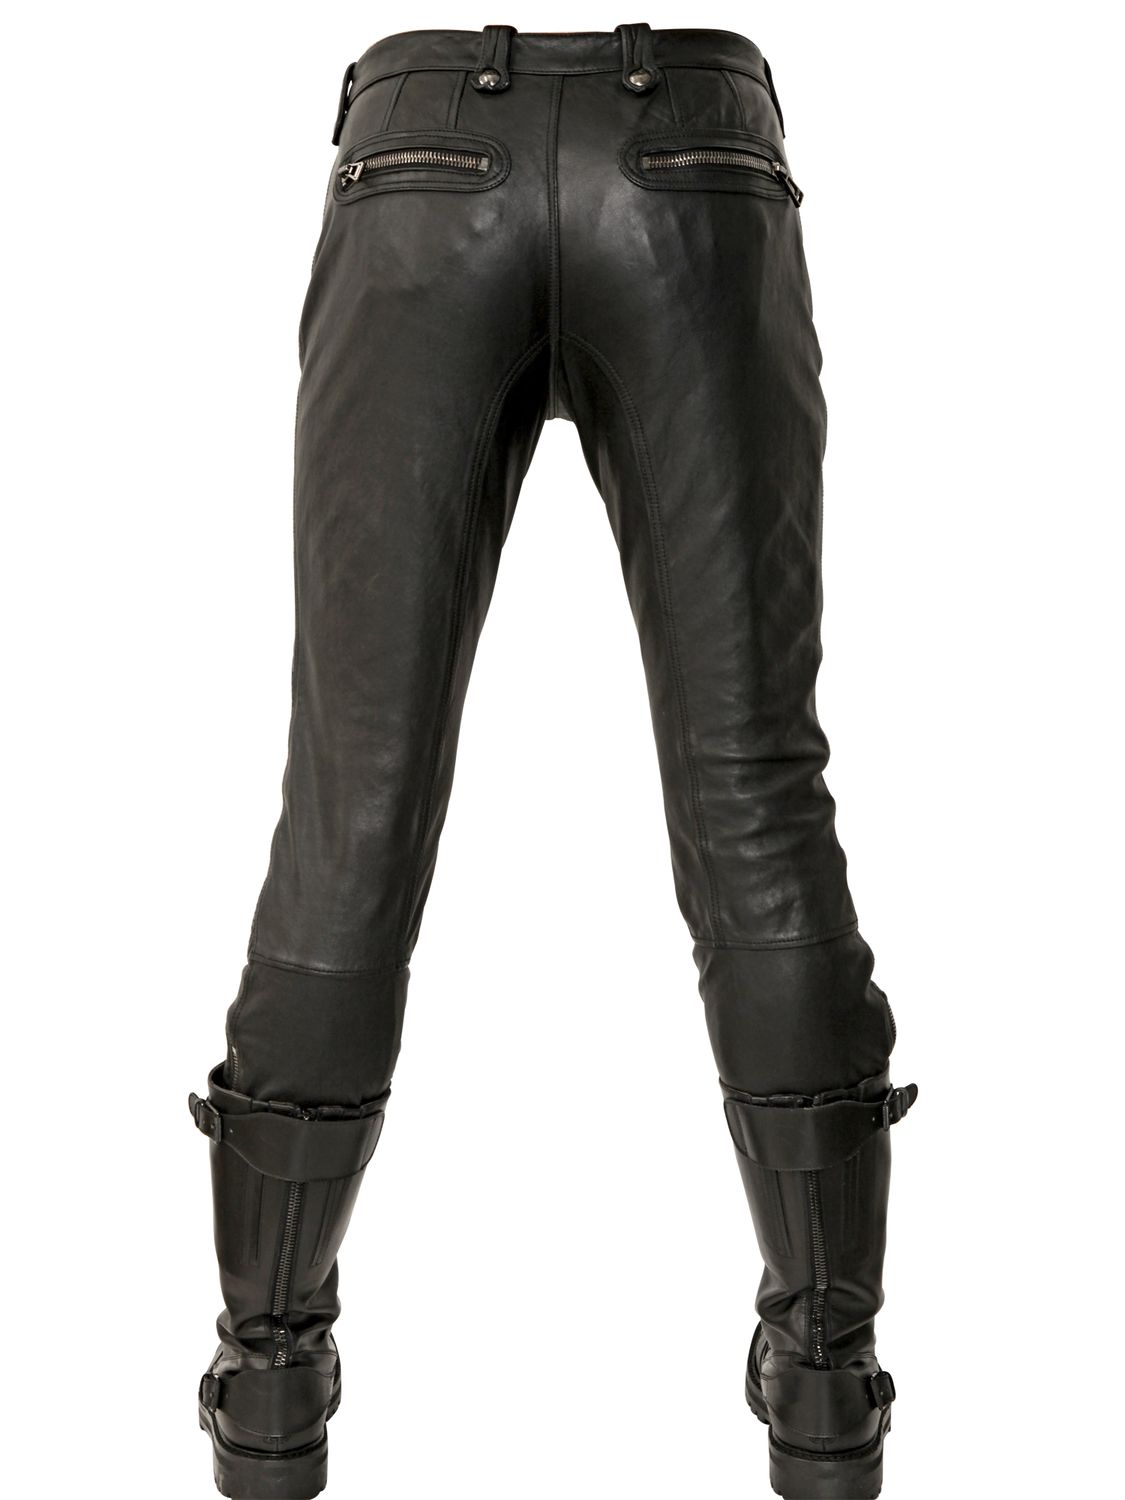 Lyst - Belstaff 17cm Washed Leather Biker Trousers in Black for Men